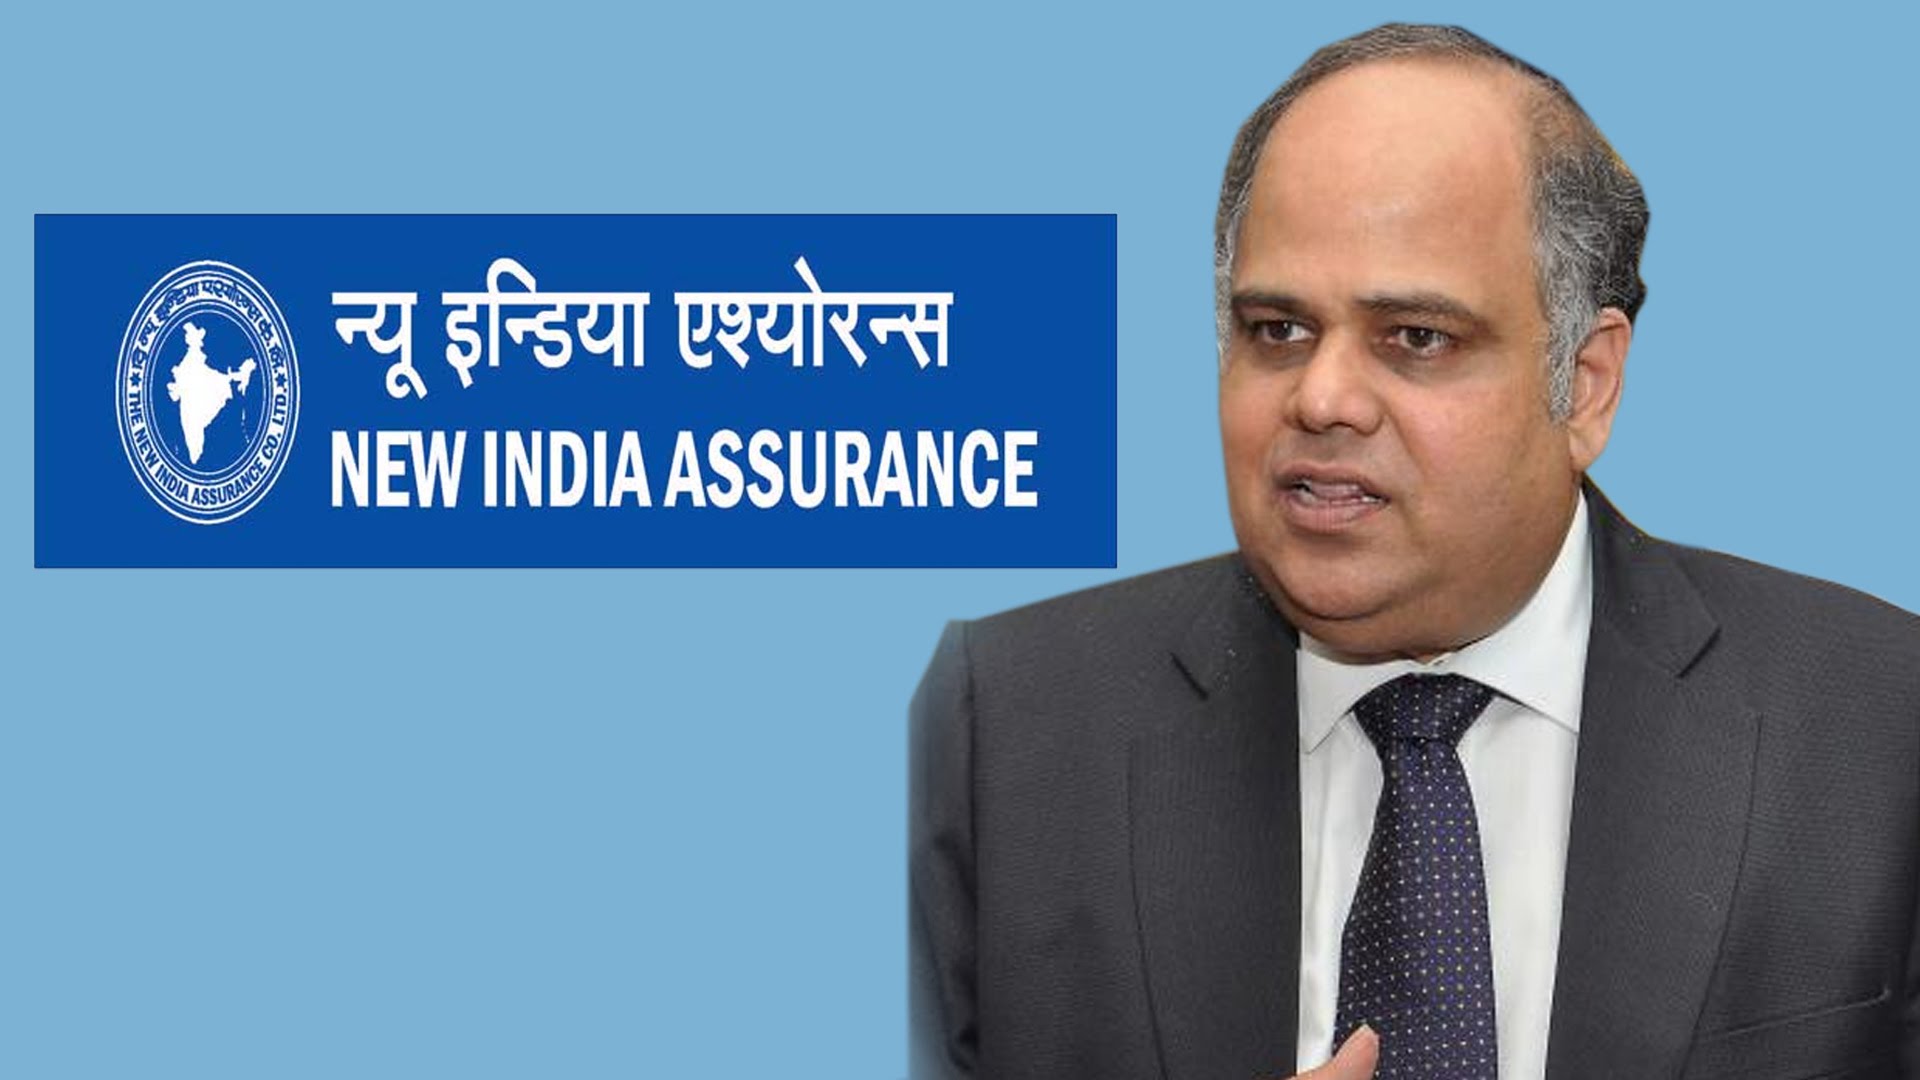 New India Assurance CMD Mr. G. Srinivasan